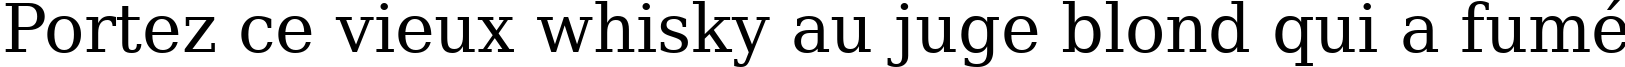 Пример написания шрифтом ae_Shado текста на французском